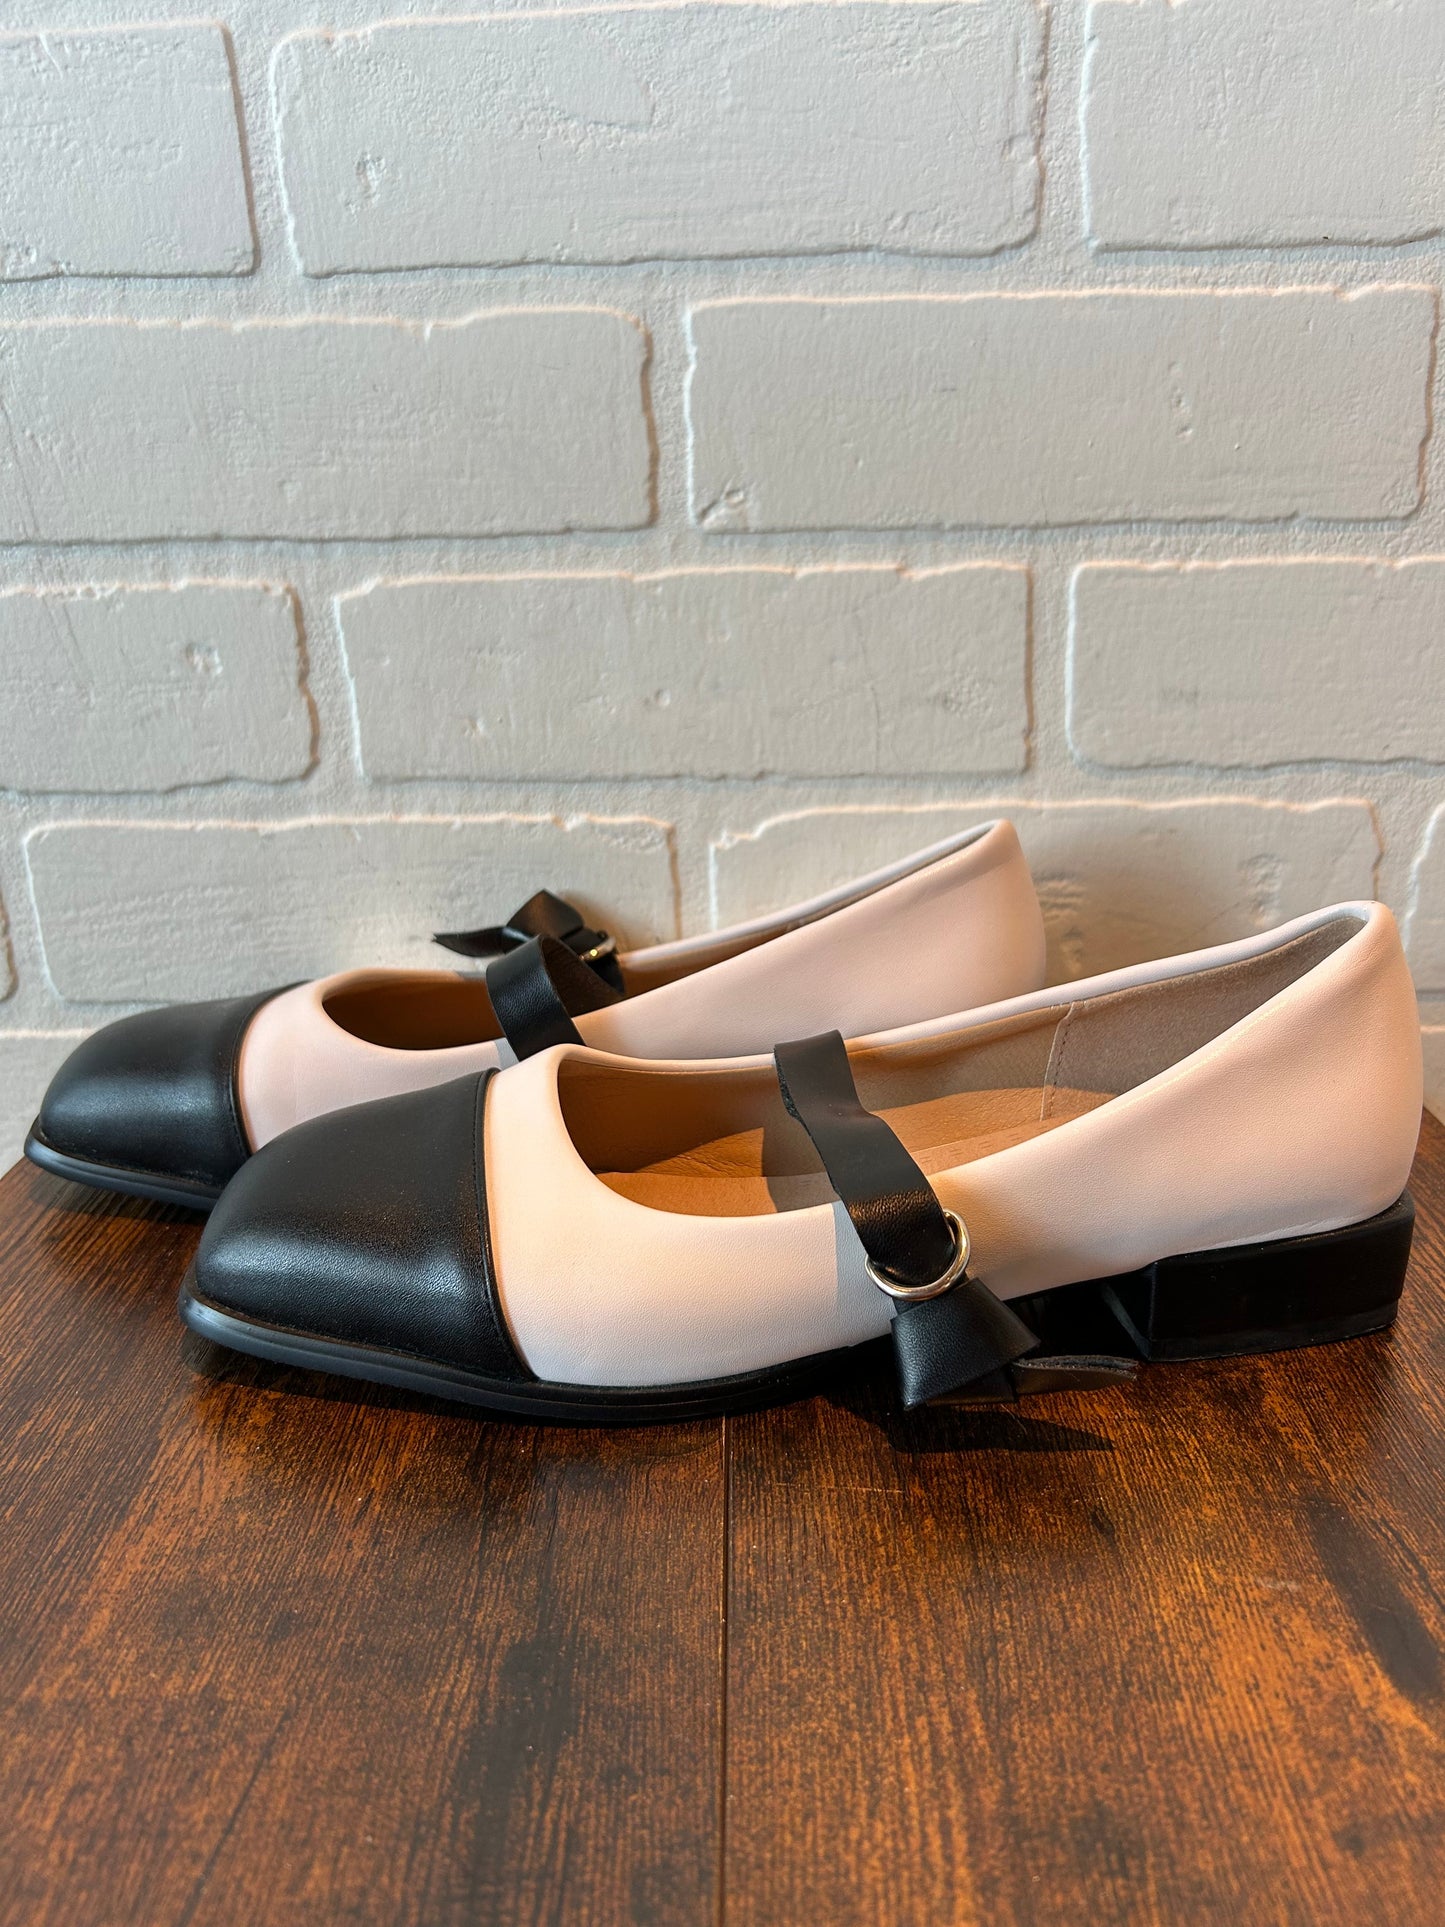 Black & White Shoes Flats Cme, Size 8